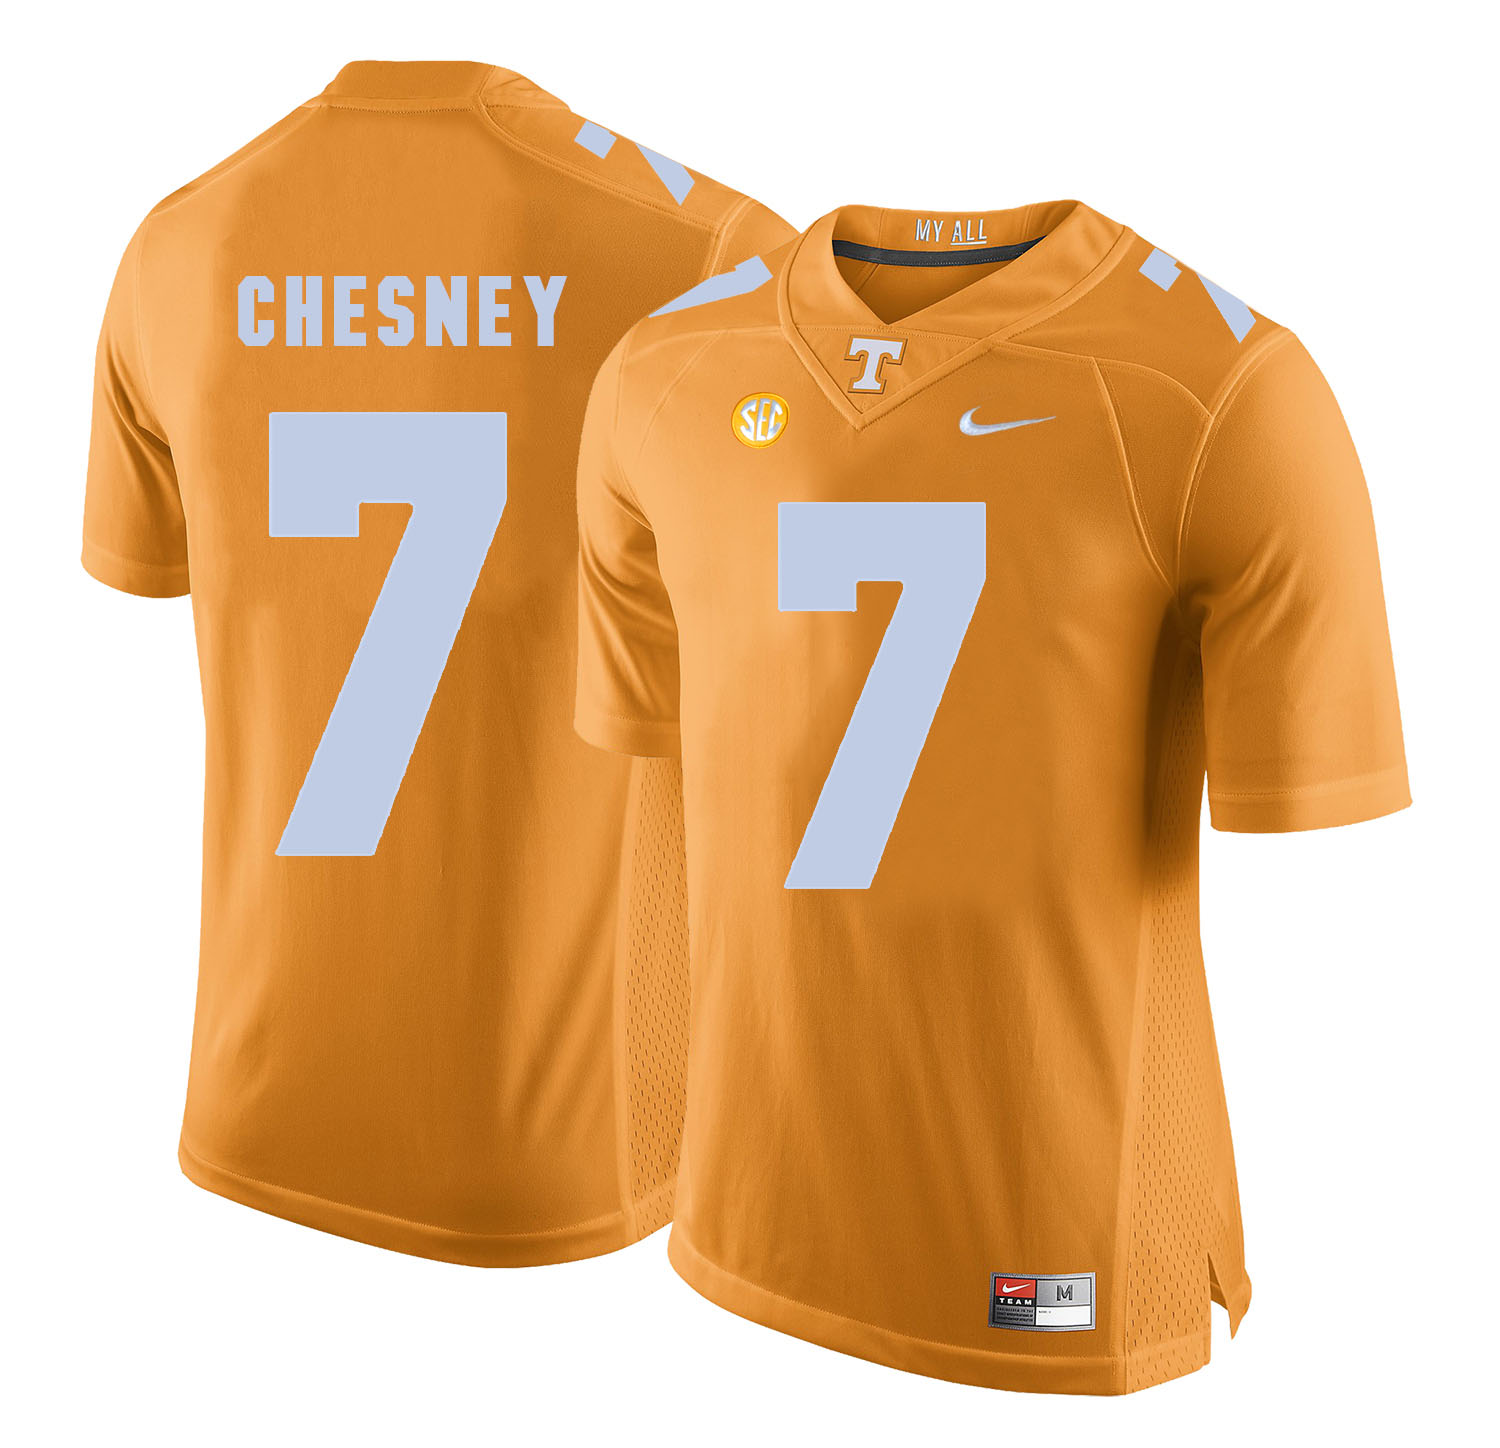 Tennessee Volunteers 7 Kenny Chesney Orange College Football Jersey